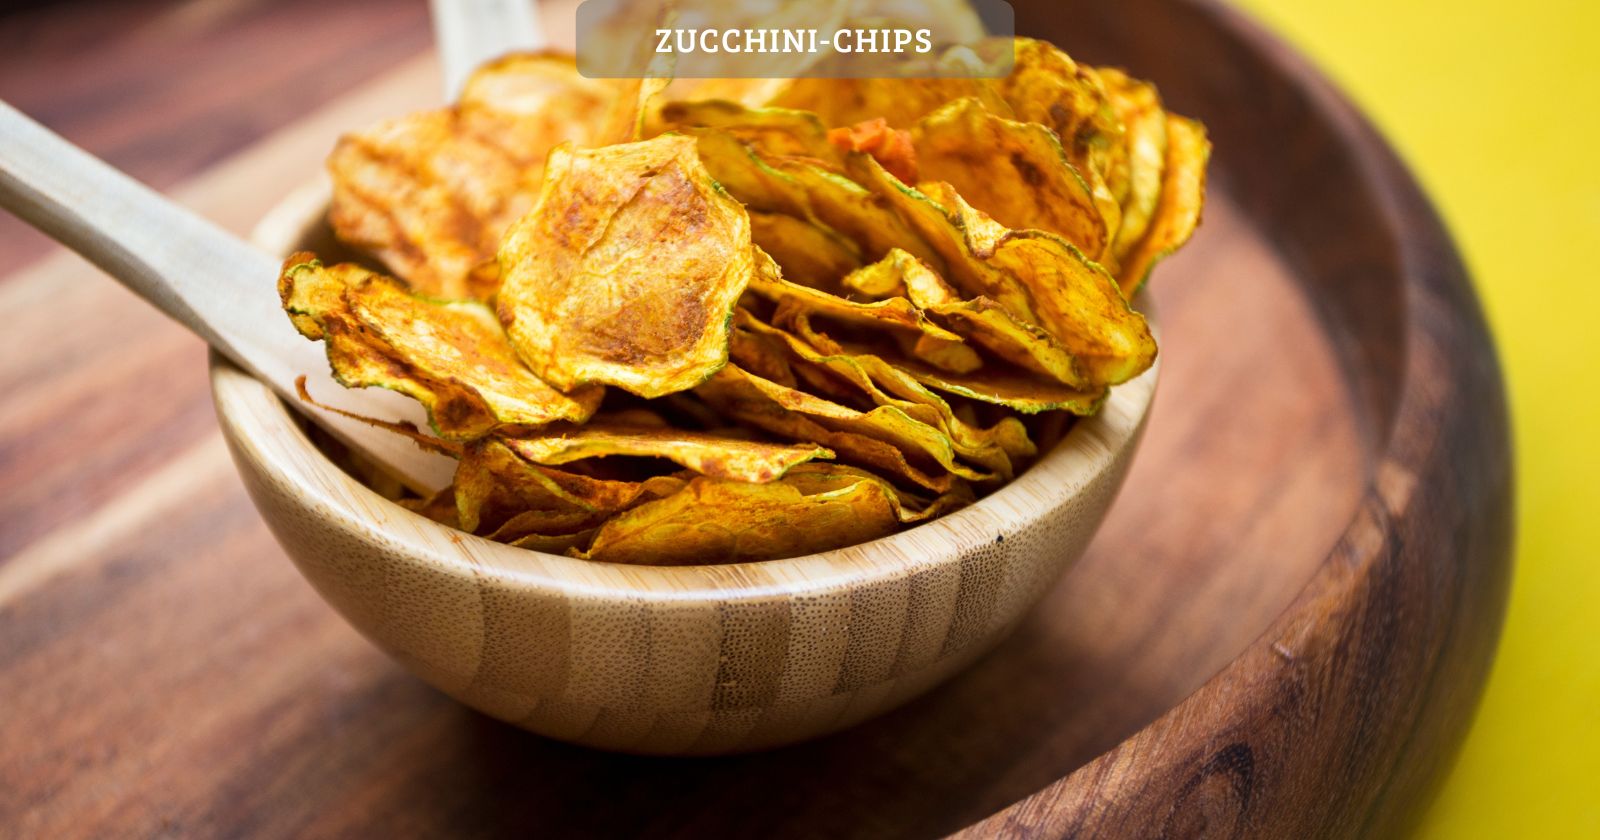 Zucchini-chips